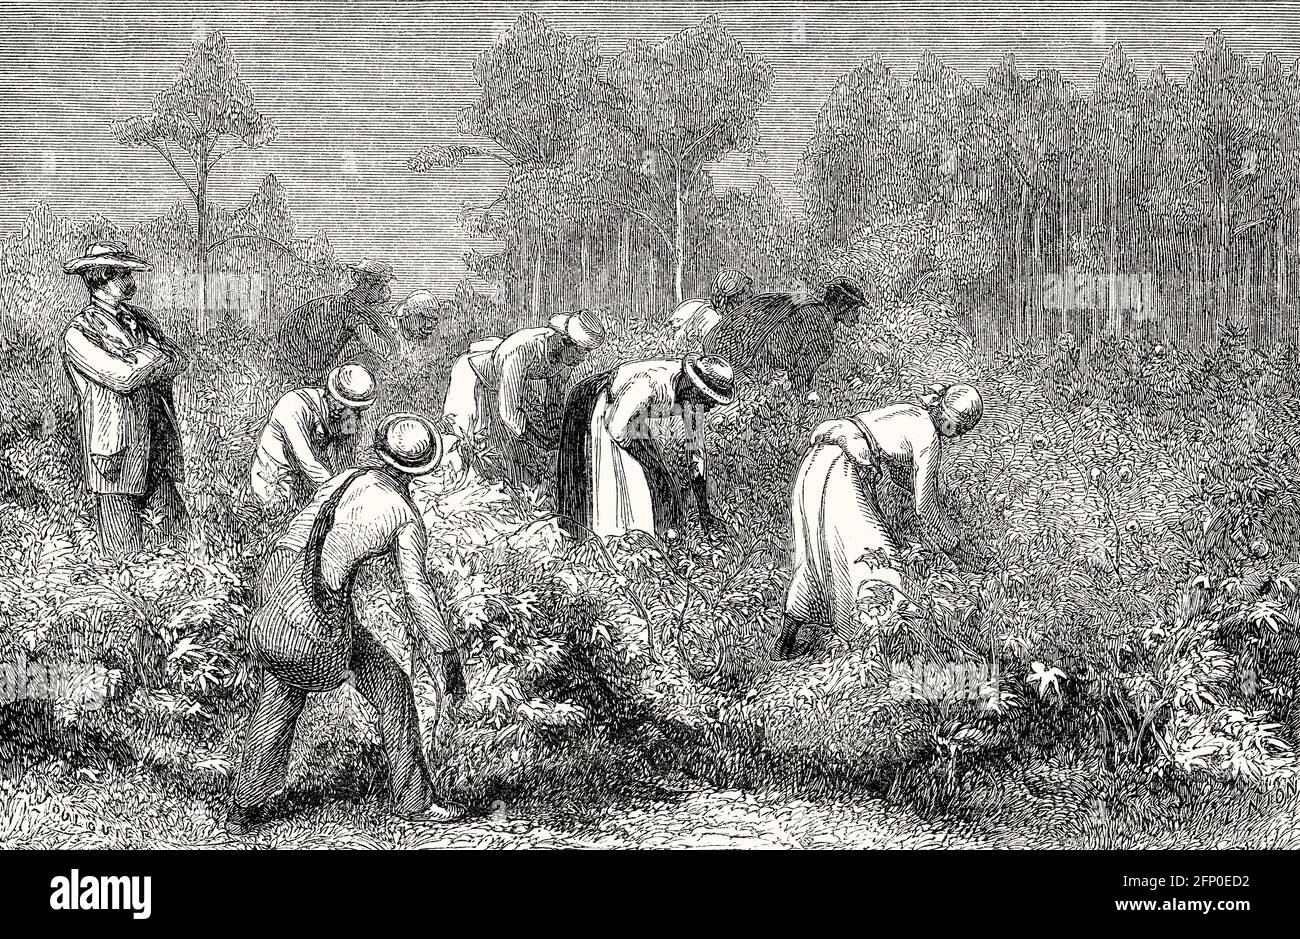 US-American history, cotton picking, 19th century Stock Photo